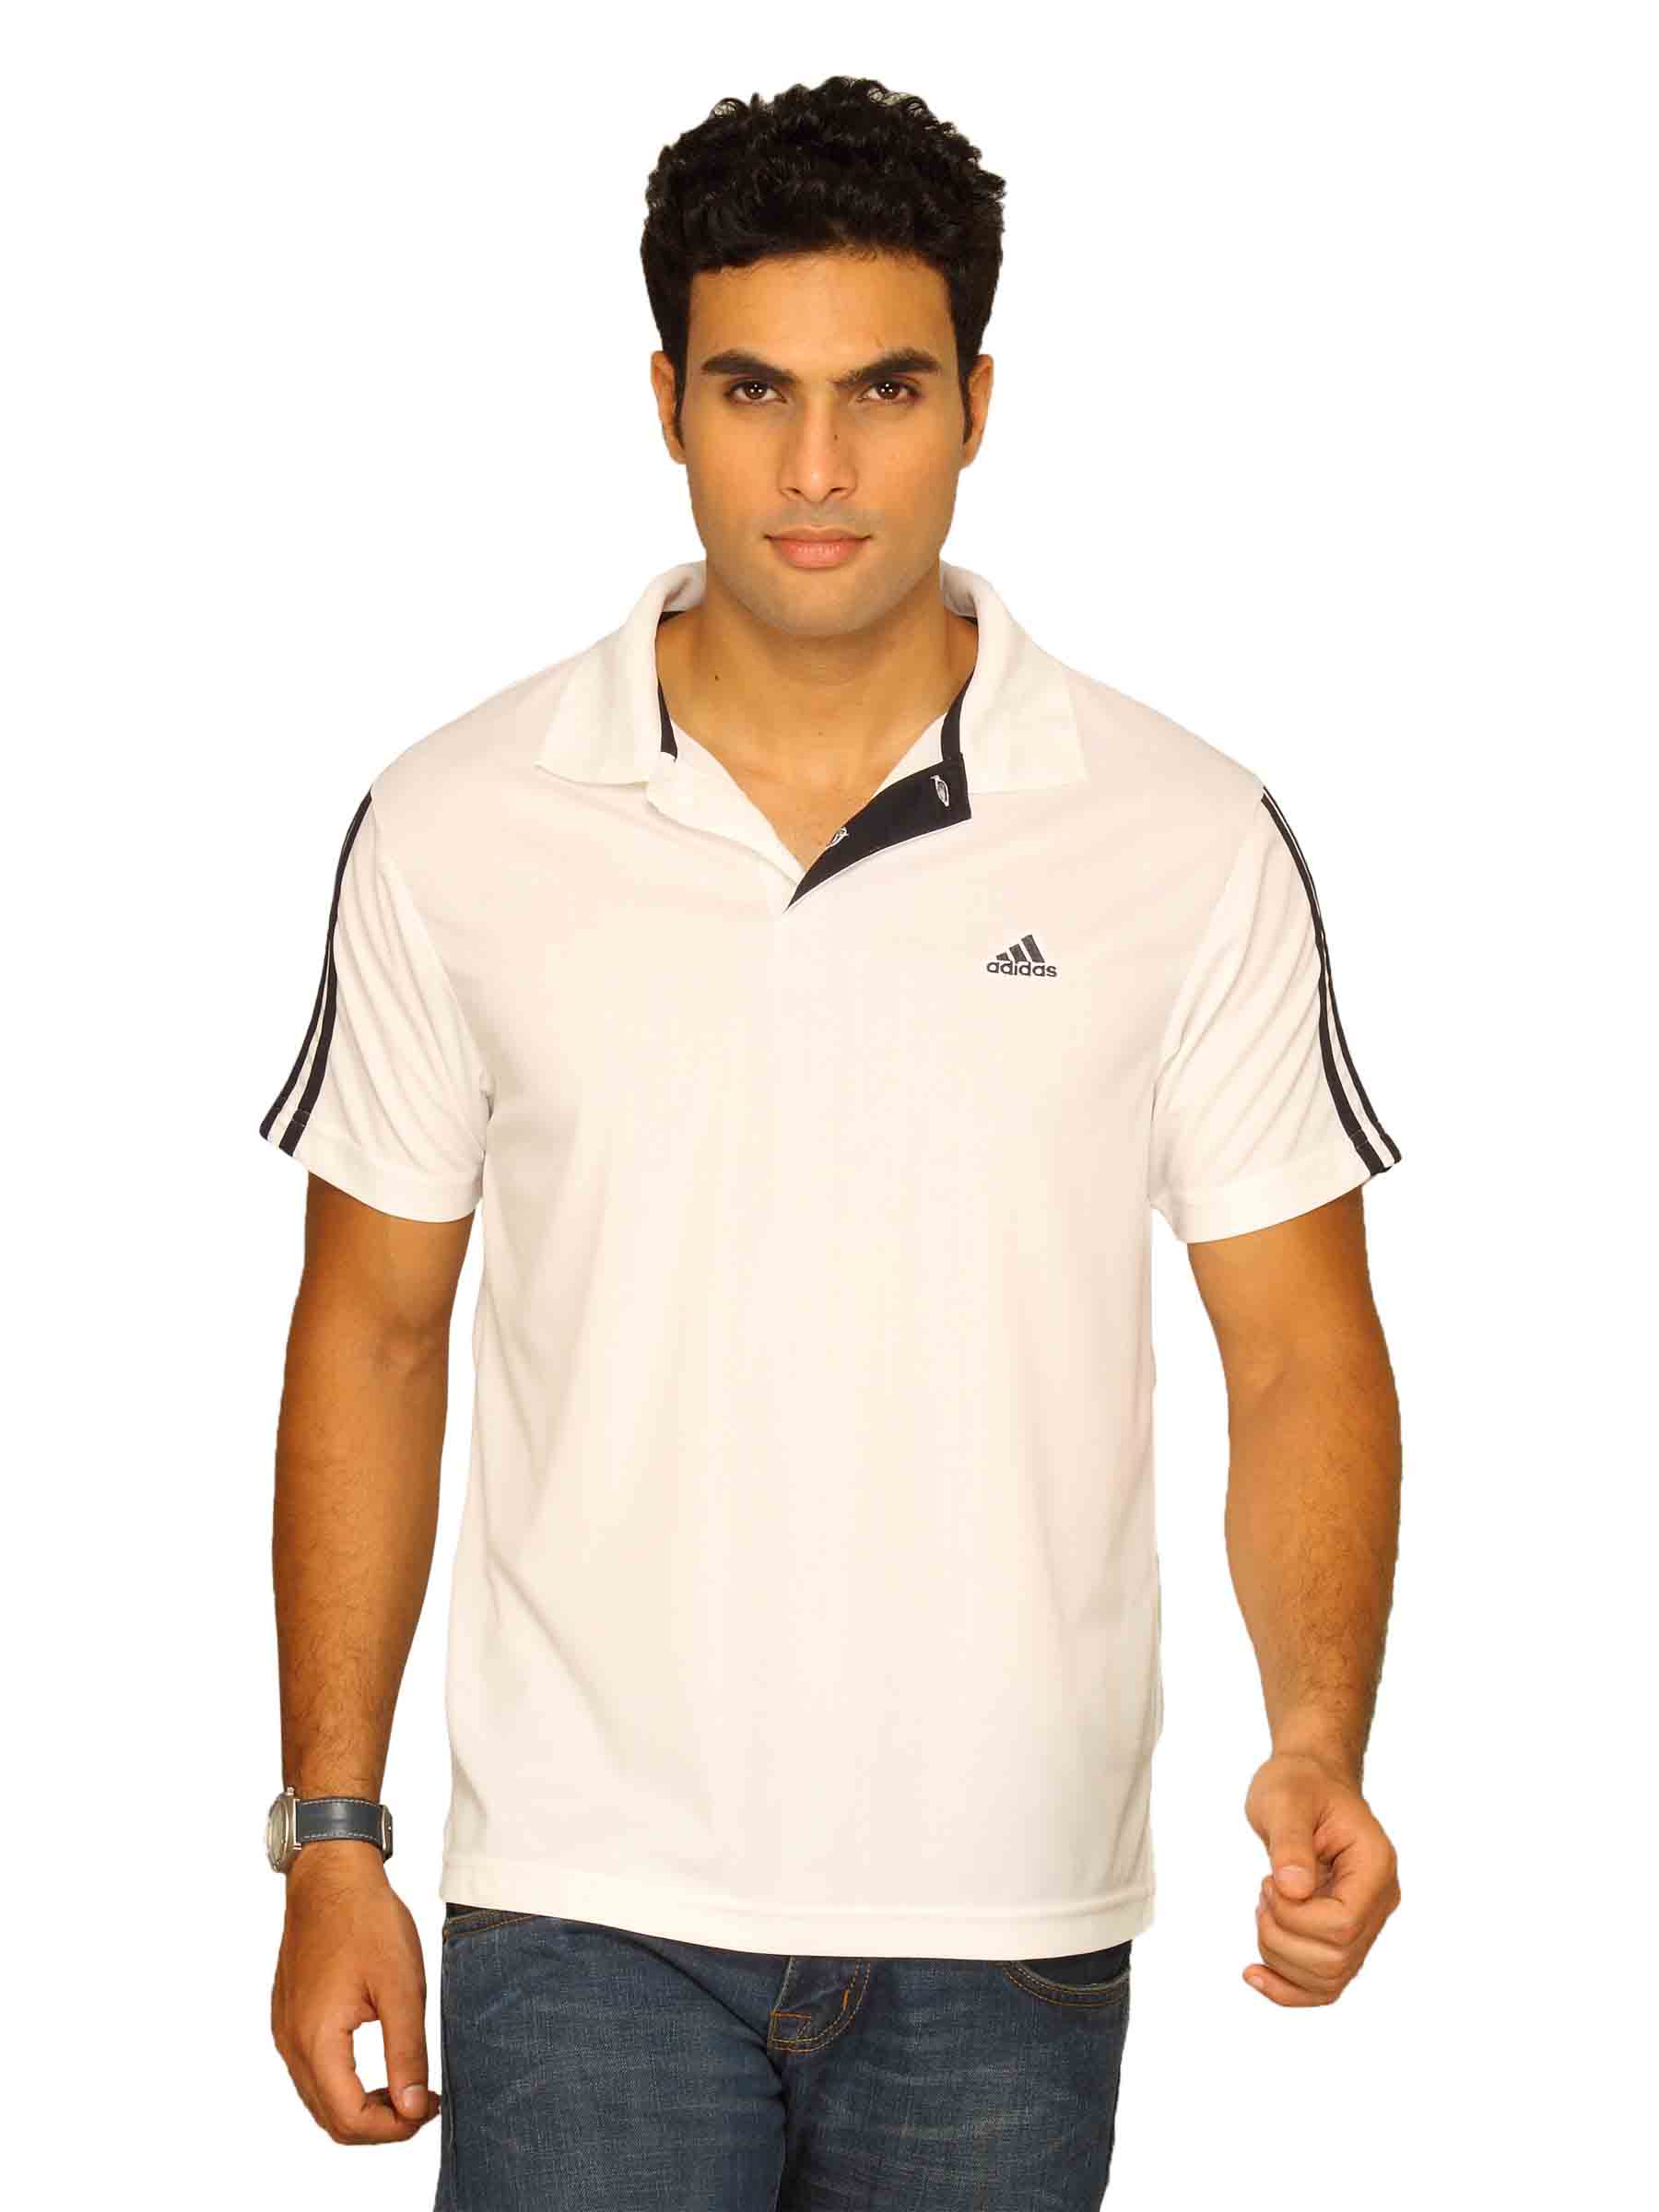 ADIDAS Men's 3S PES Comb White Polo T-shirt